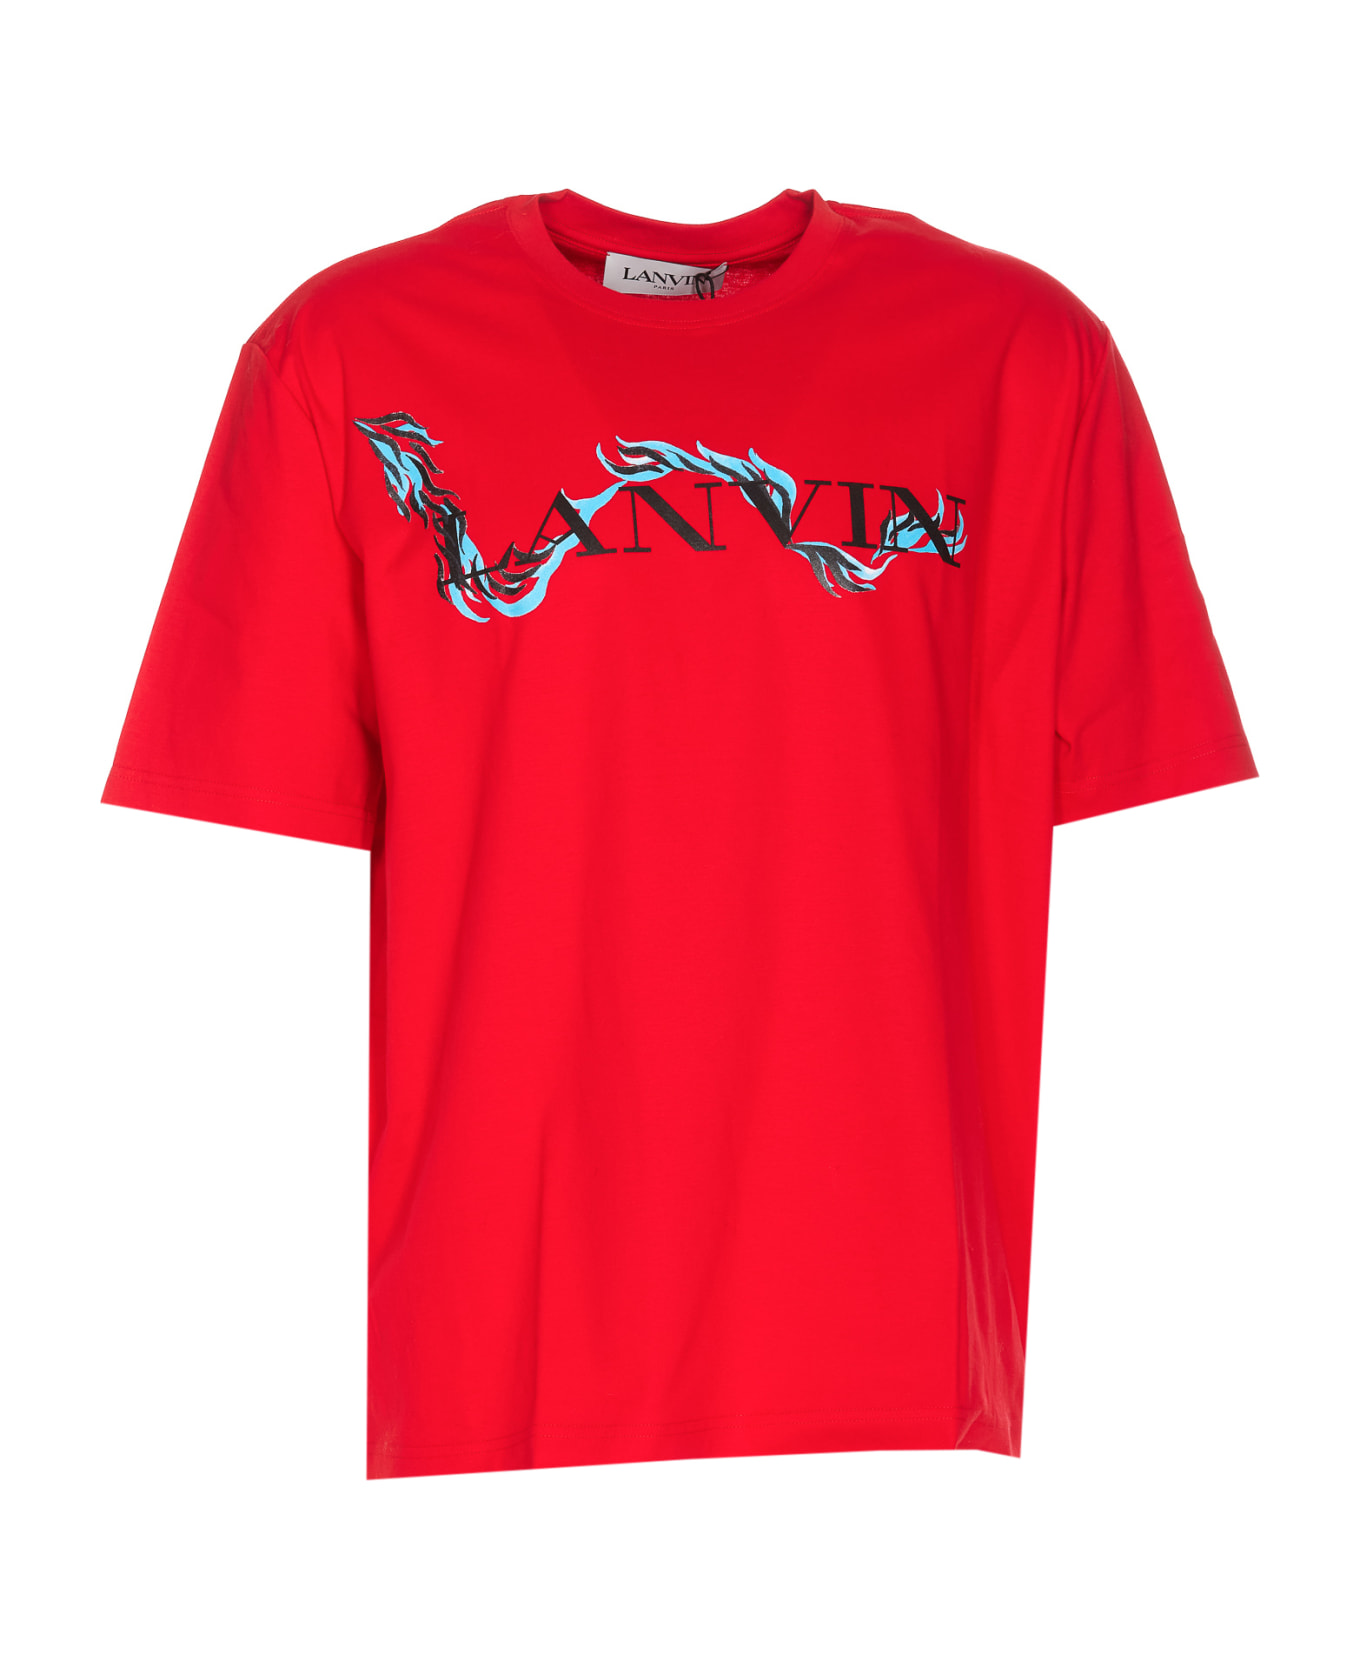 Lanvin T-shirt - Red シャツ